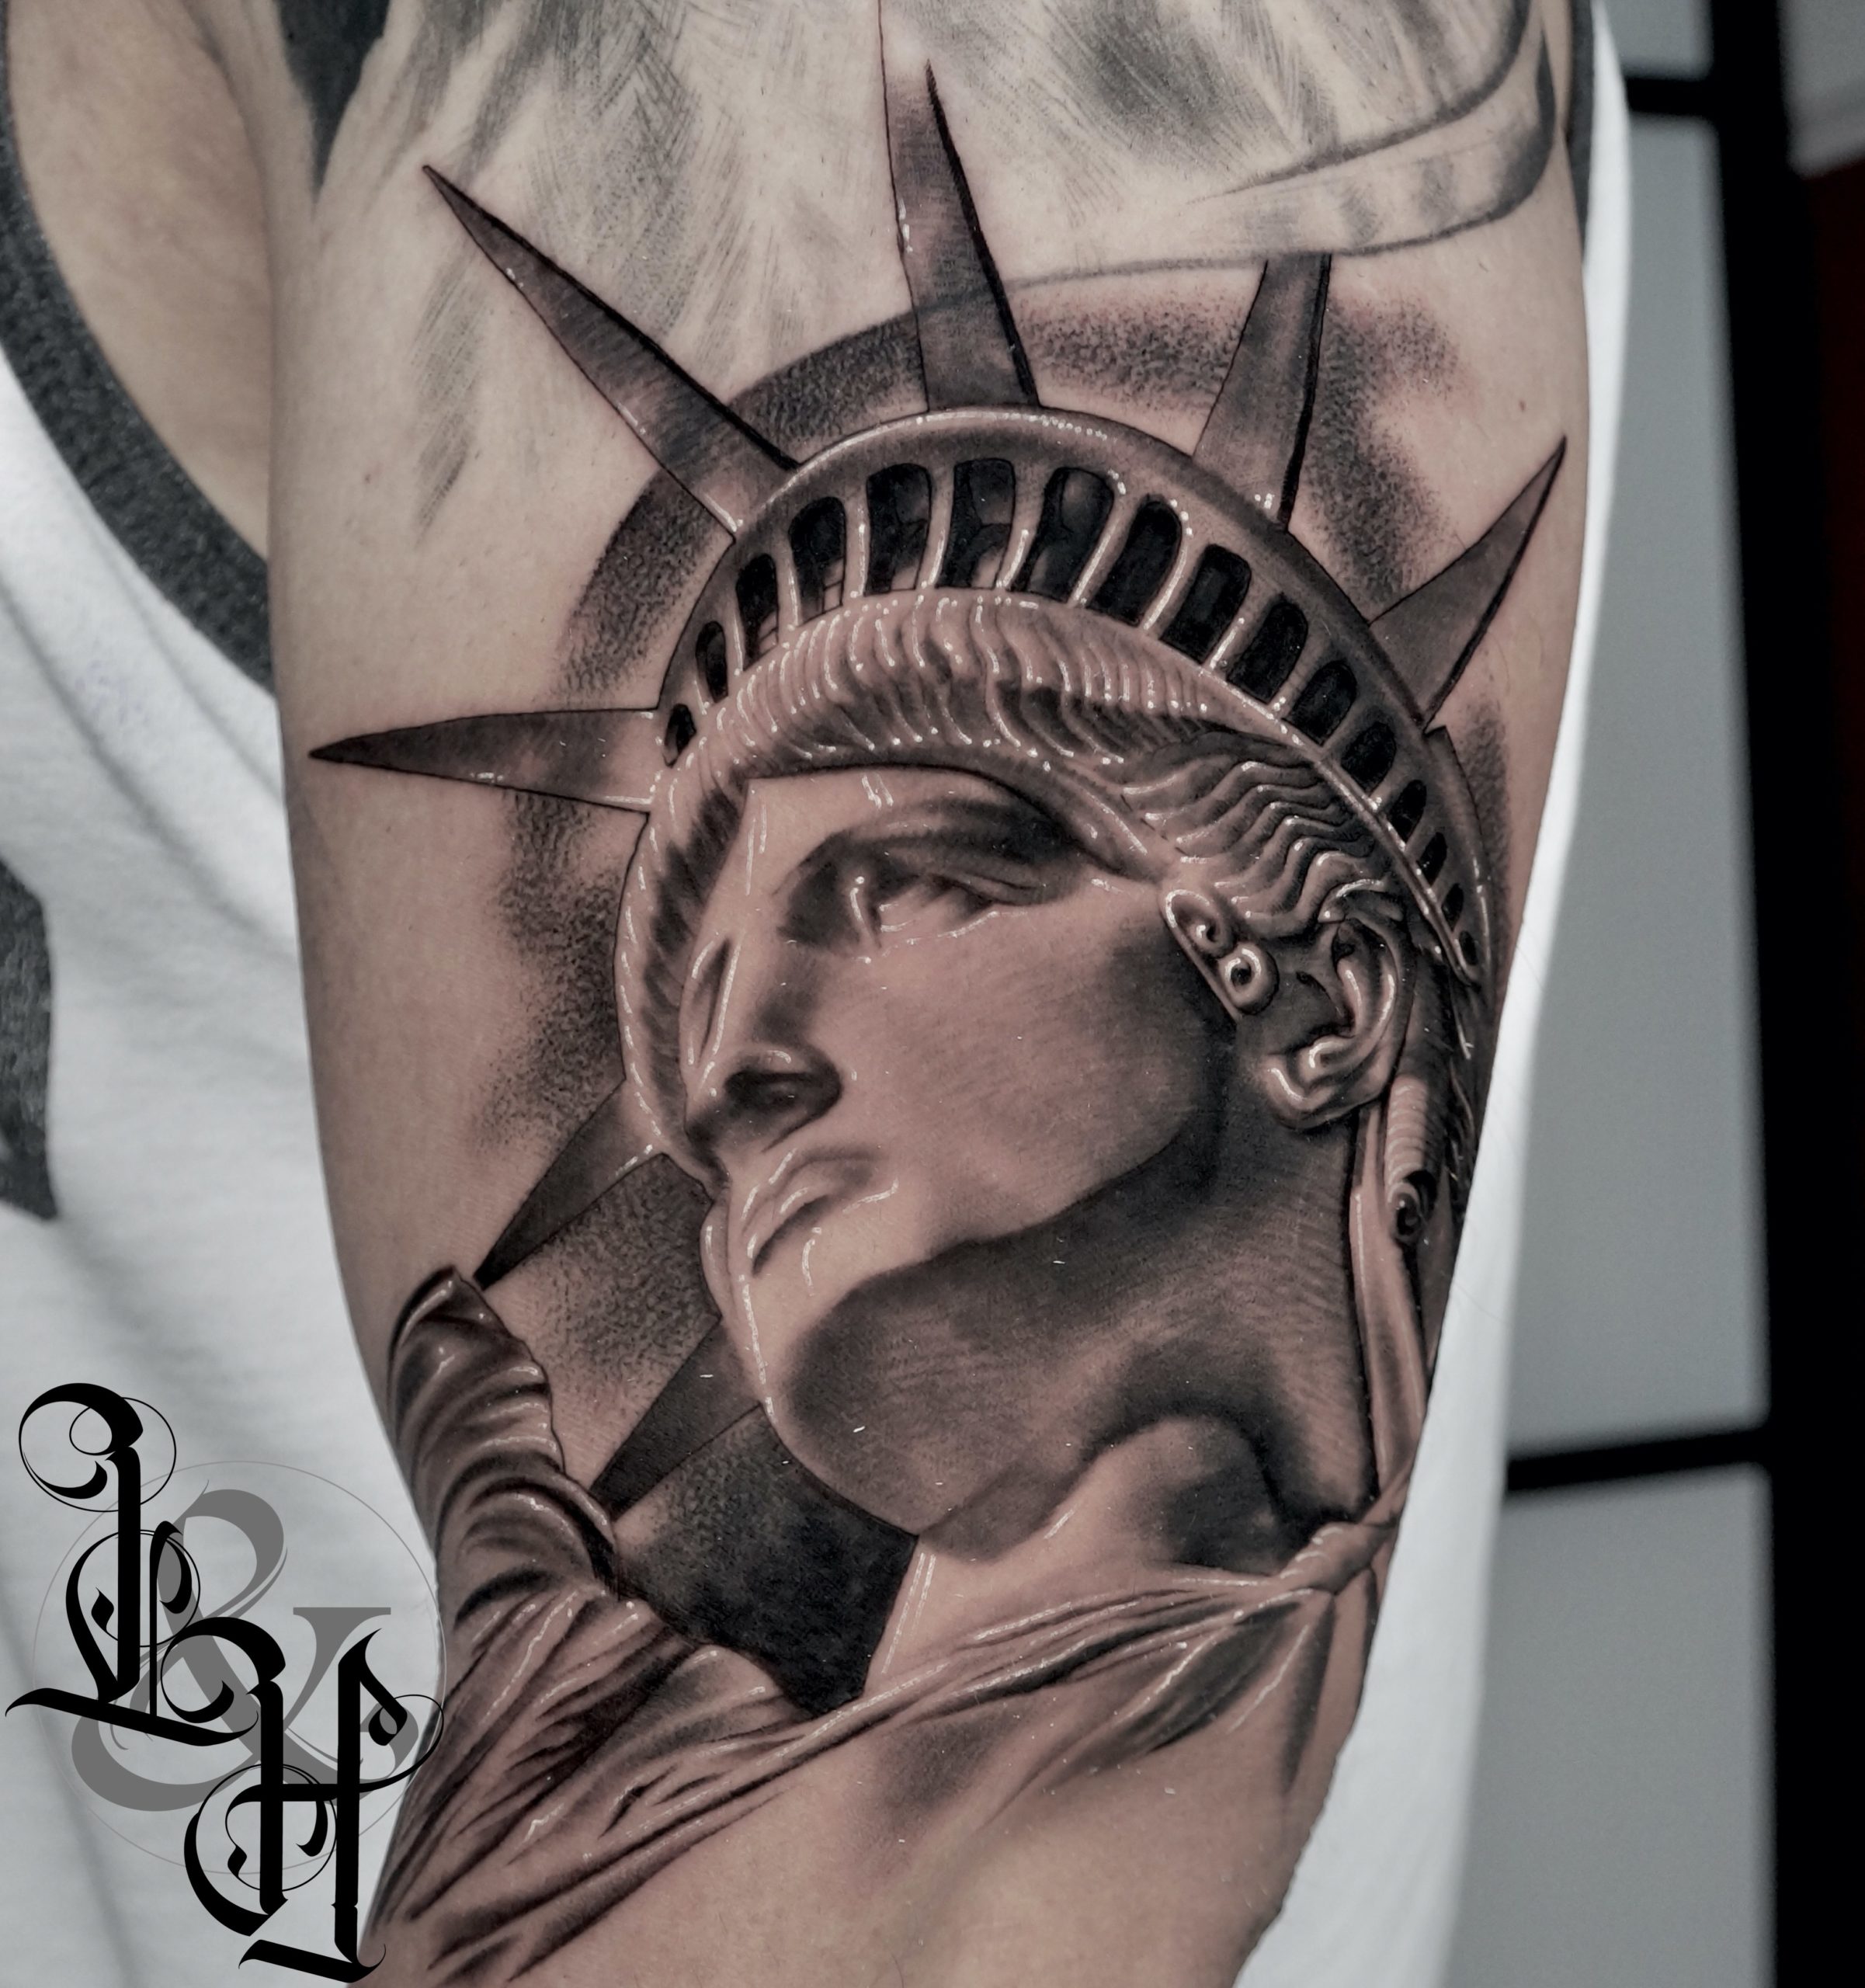 statue of liberty sketch tattoo